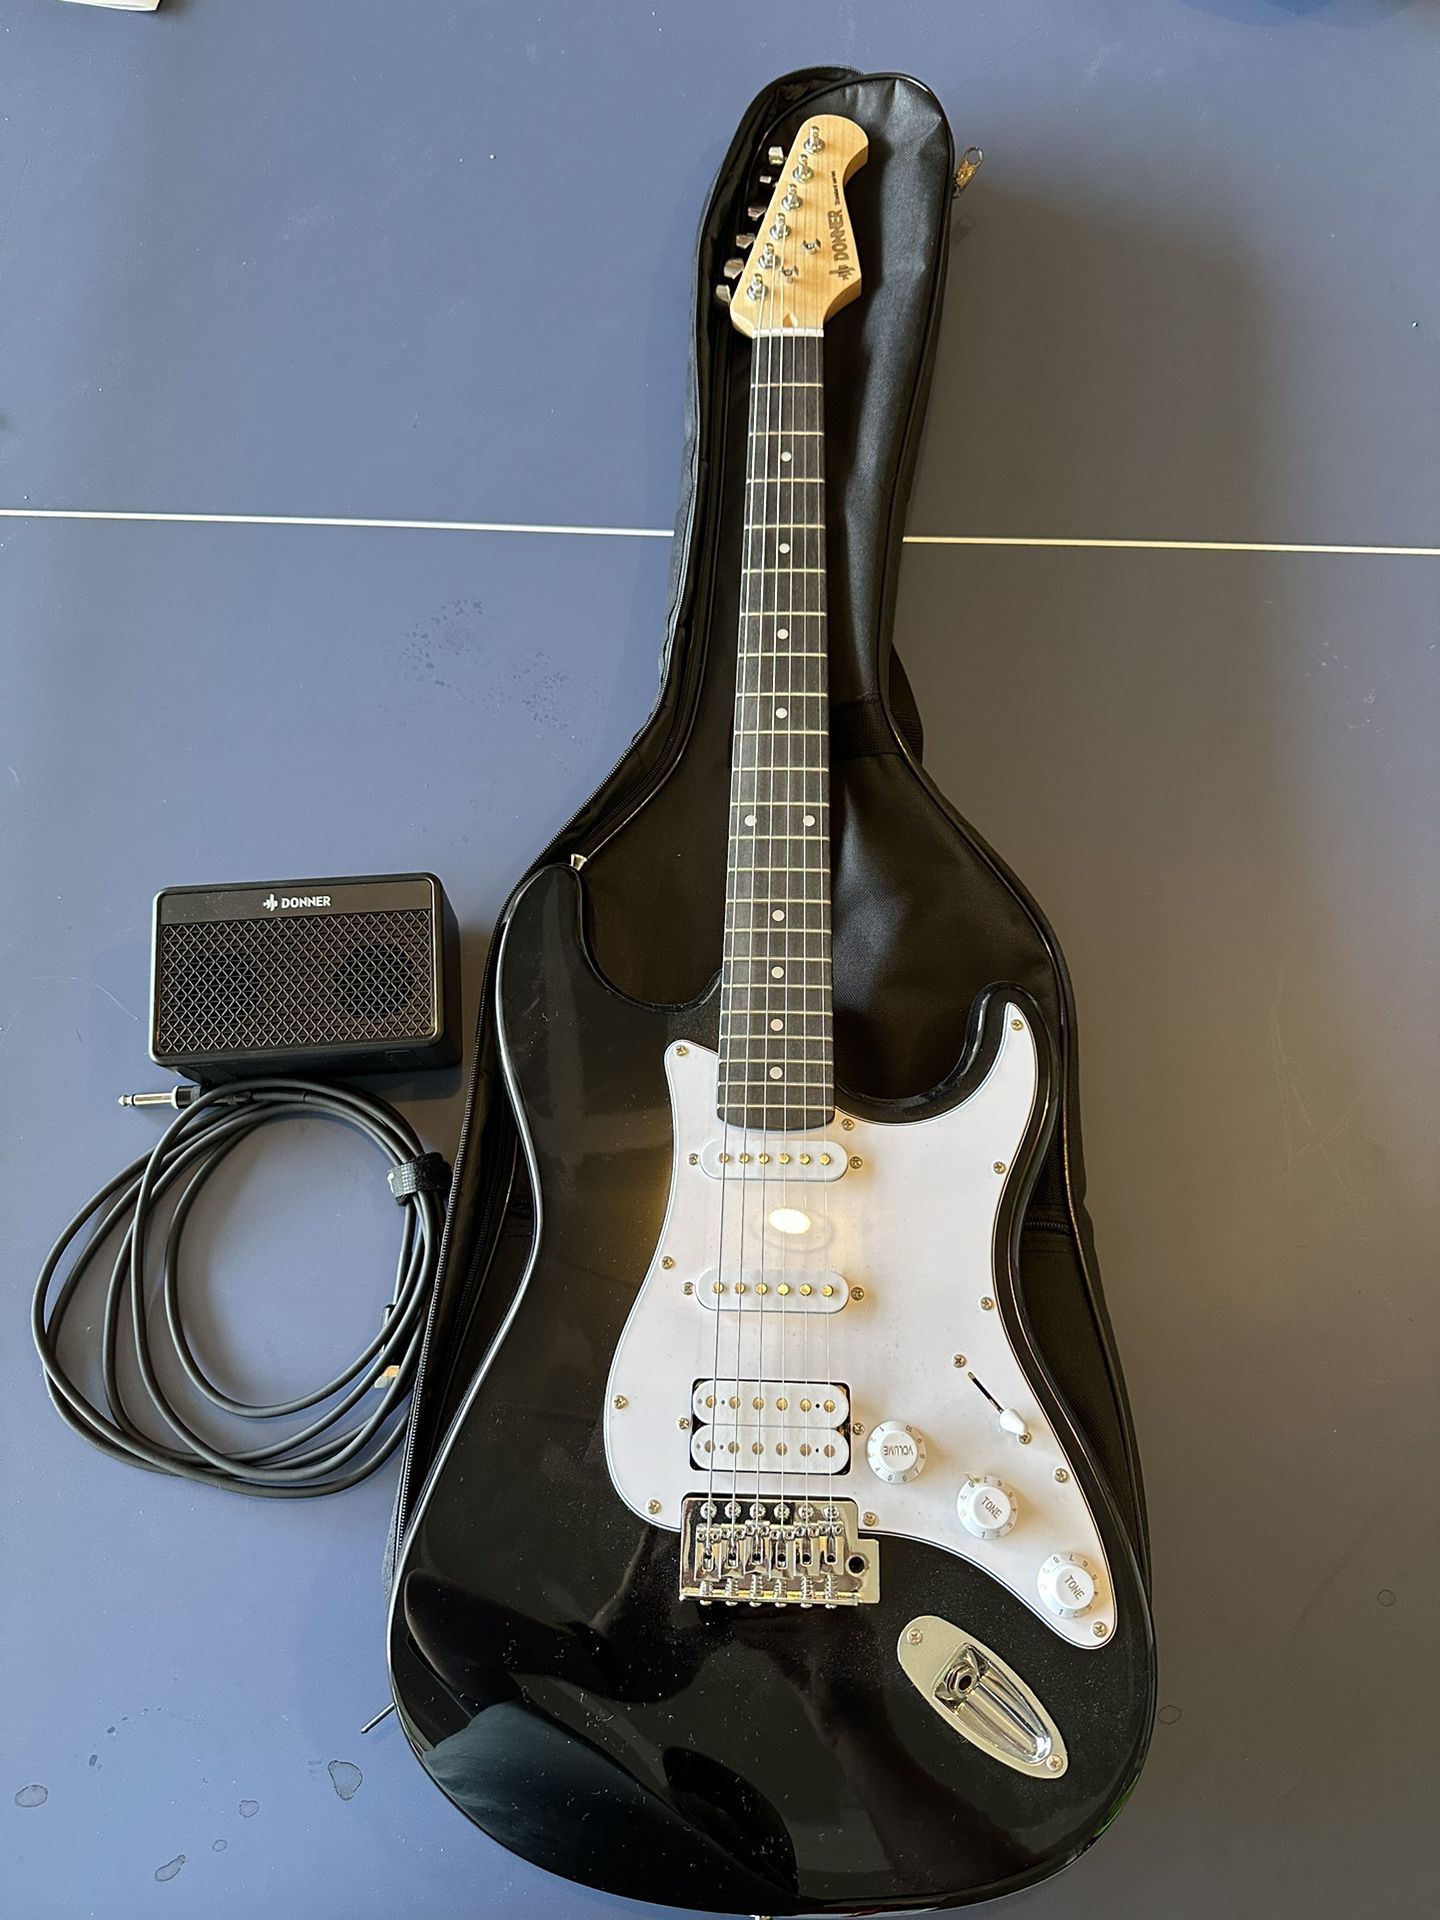 39” Doner Electric Guitar w/Amplifier